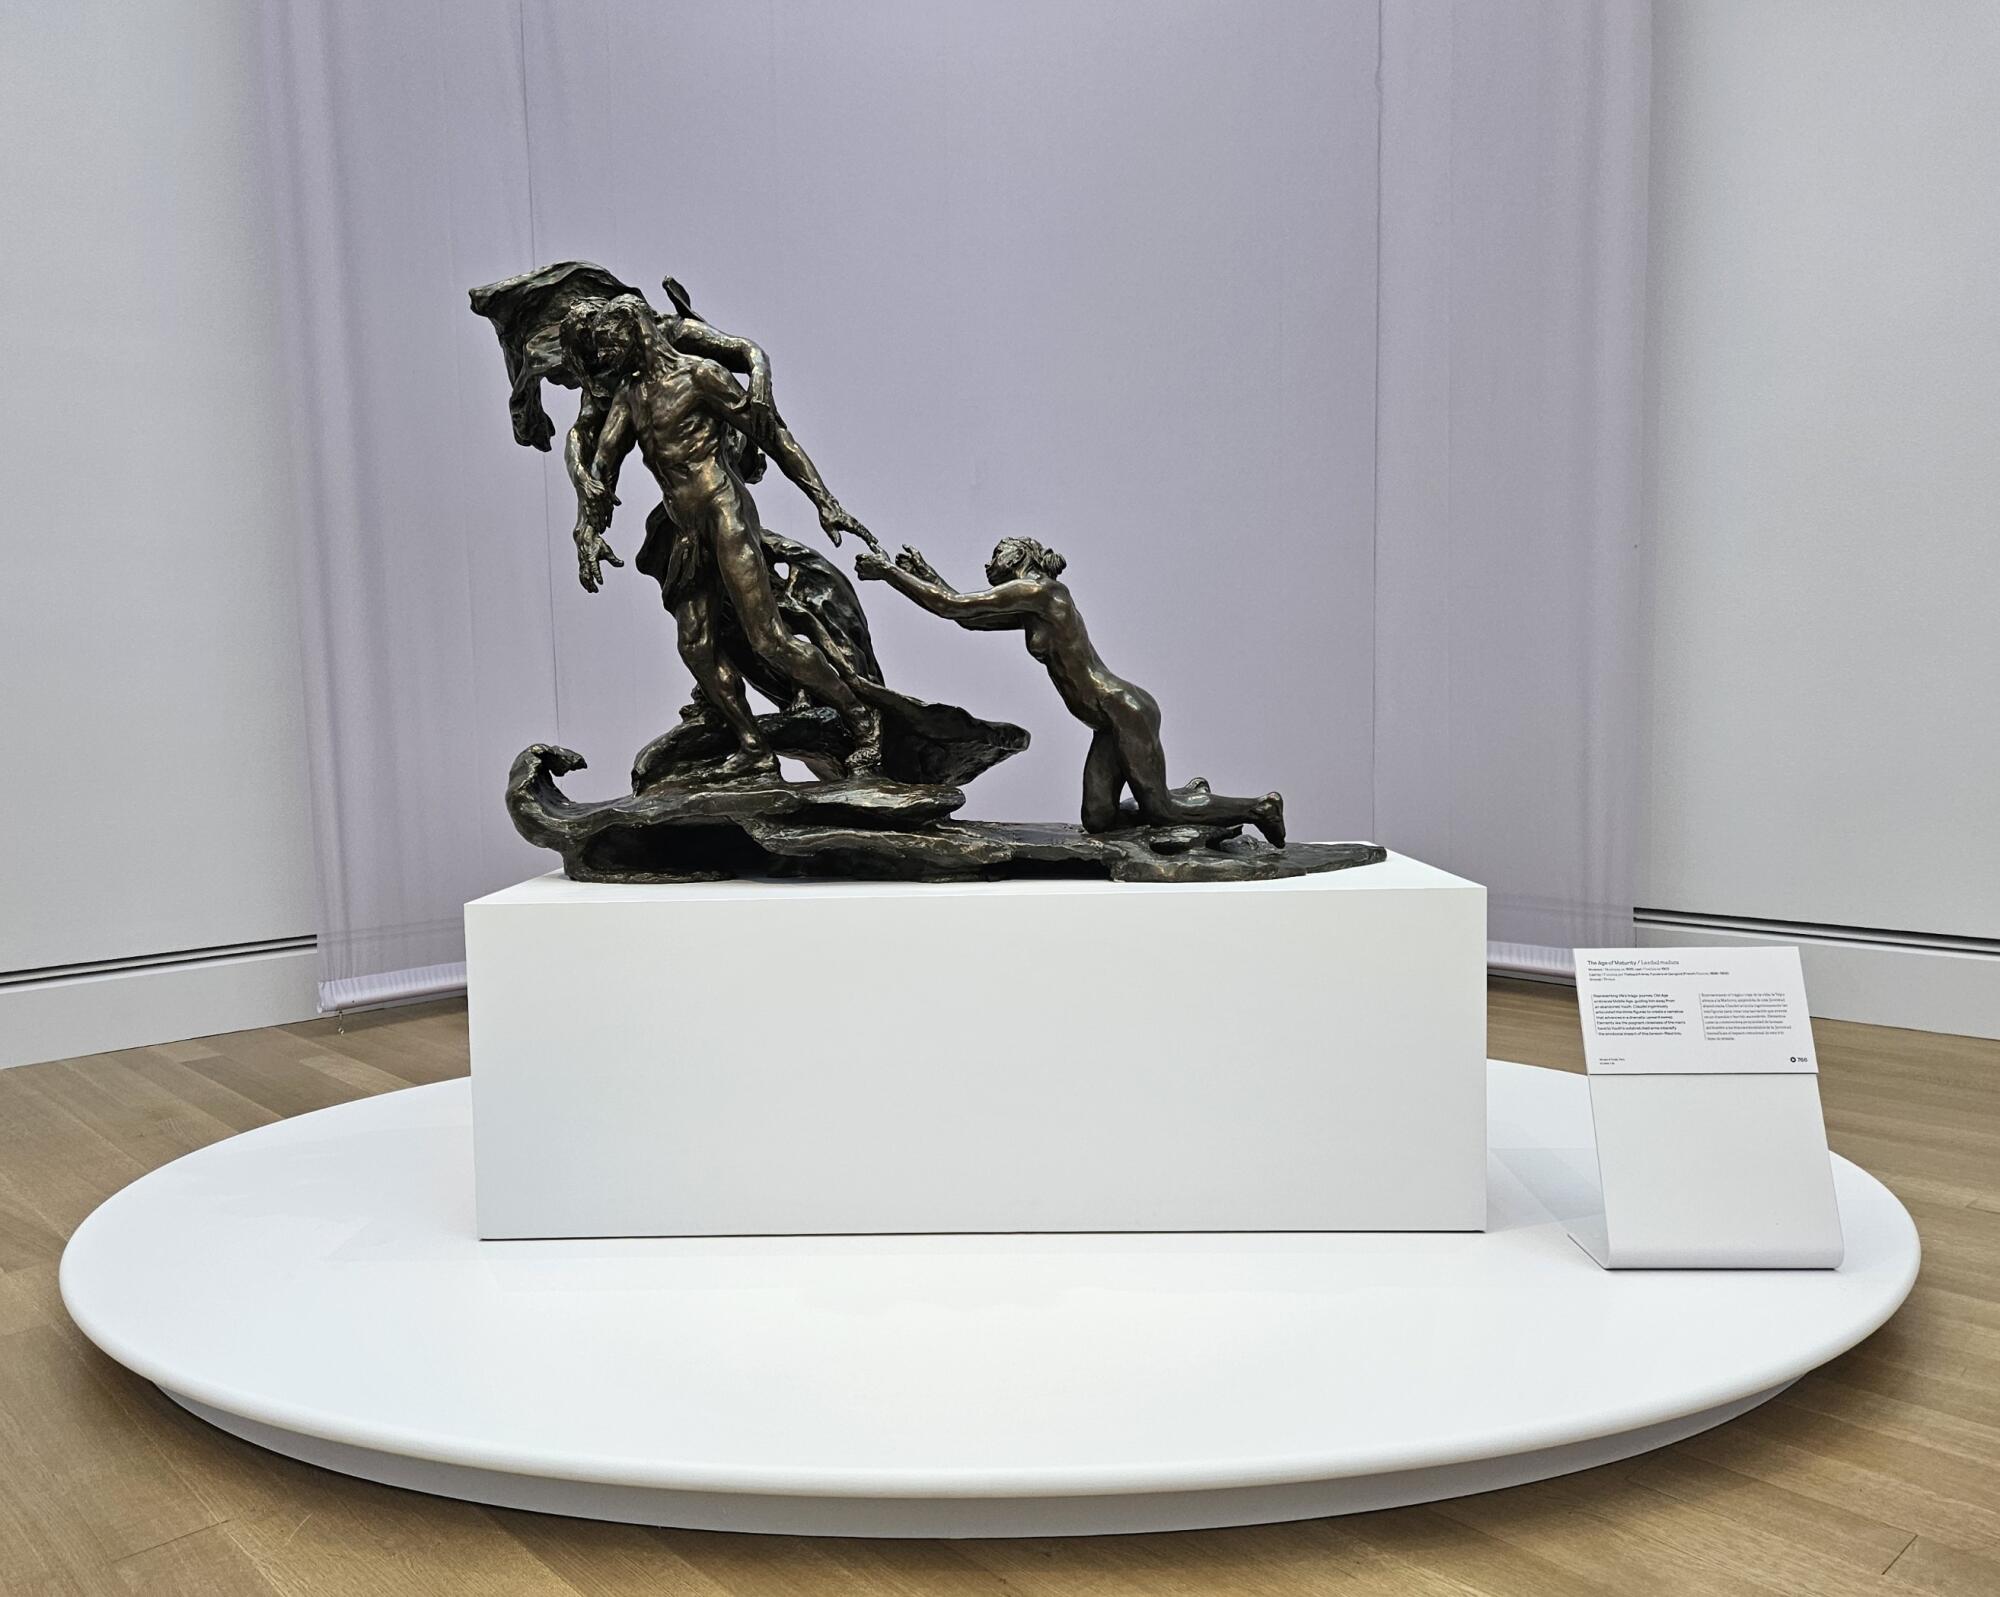 Camille Claudel, "Das Zeitalter der Reife," 1890-99, Bronze